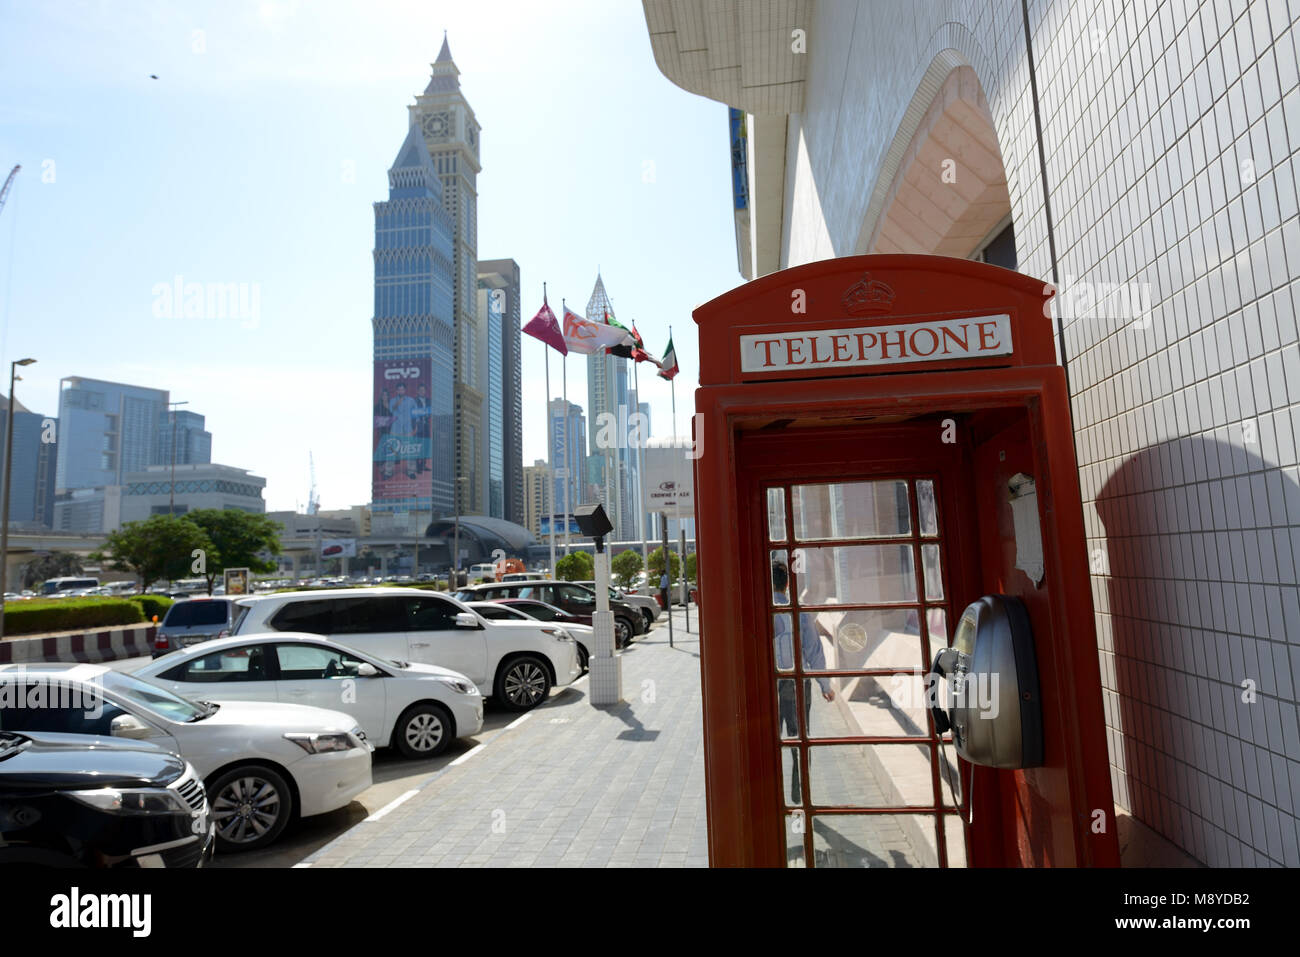 DUBAI, UAE - NOVEMBER 19: The telephone box is near Sheikh Zayed road on November 19, 2017 Stock Photo